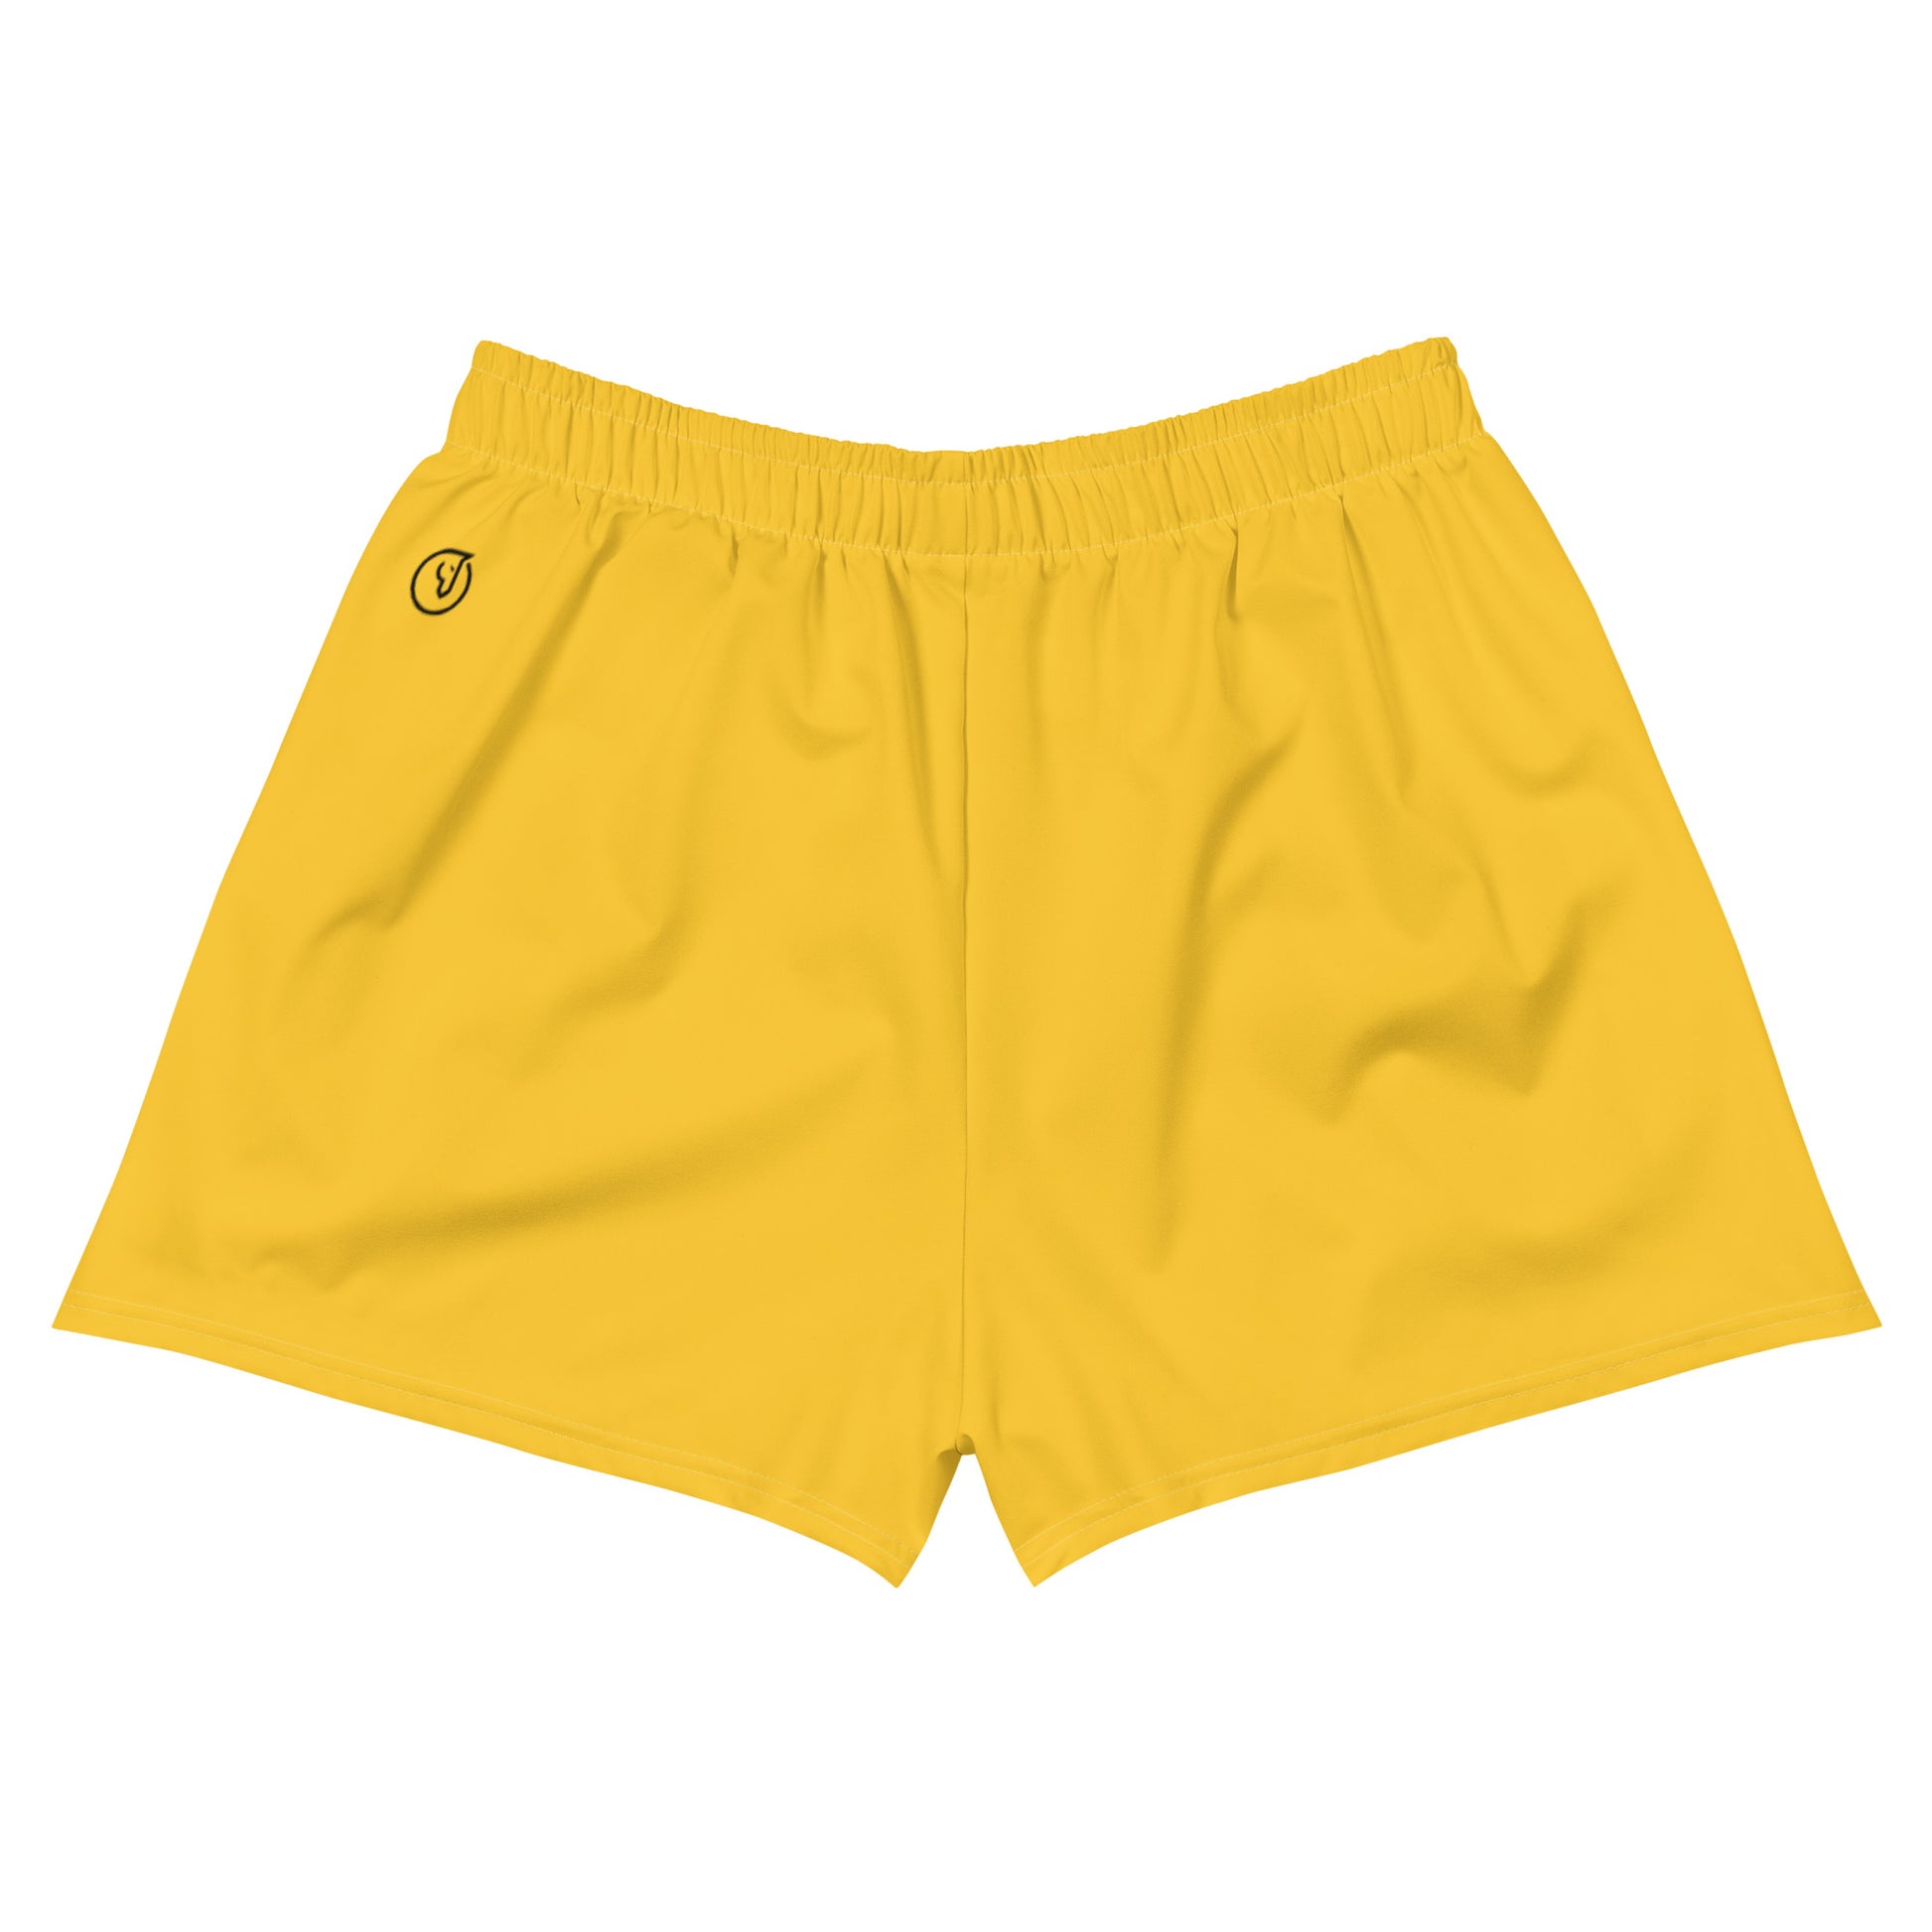 Humble Sportswear, women’s color match shorts, women’s bottoms, eco-friendly active shorts